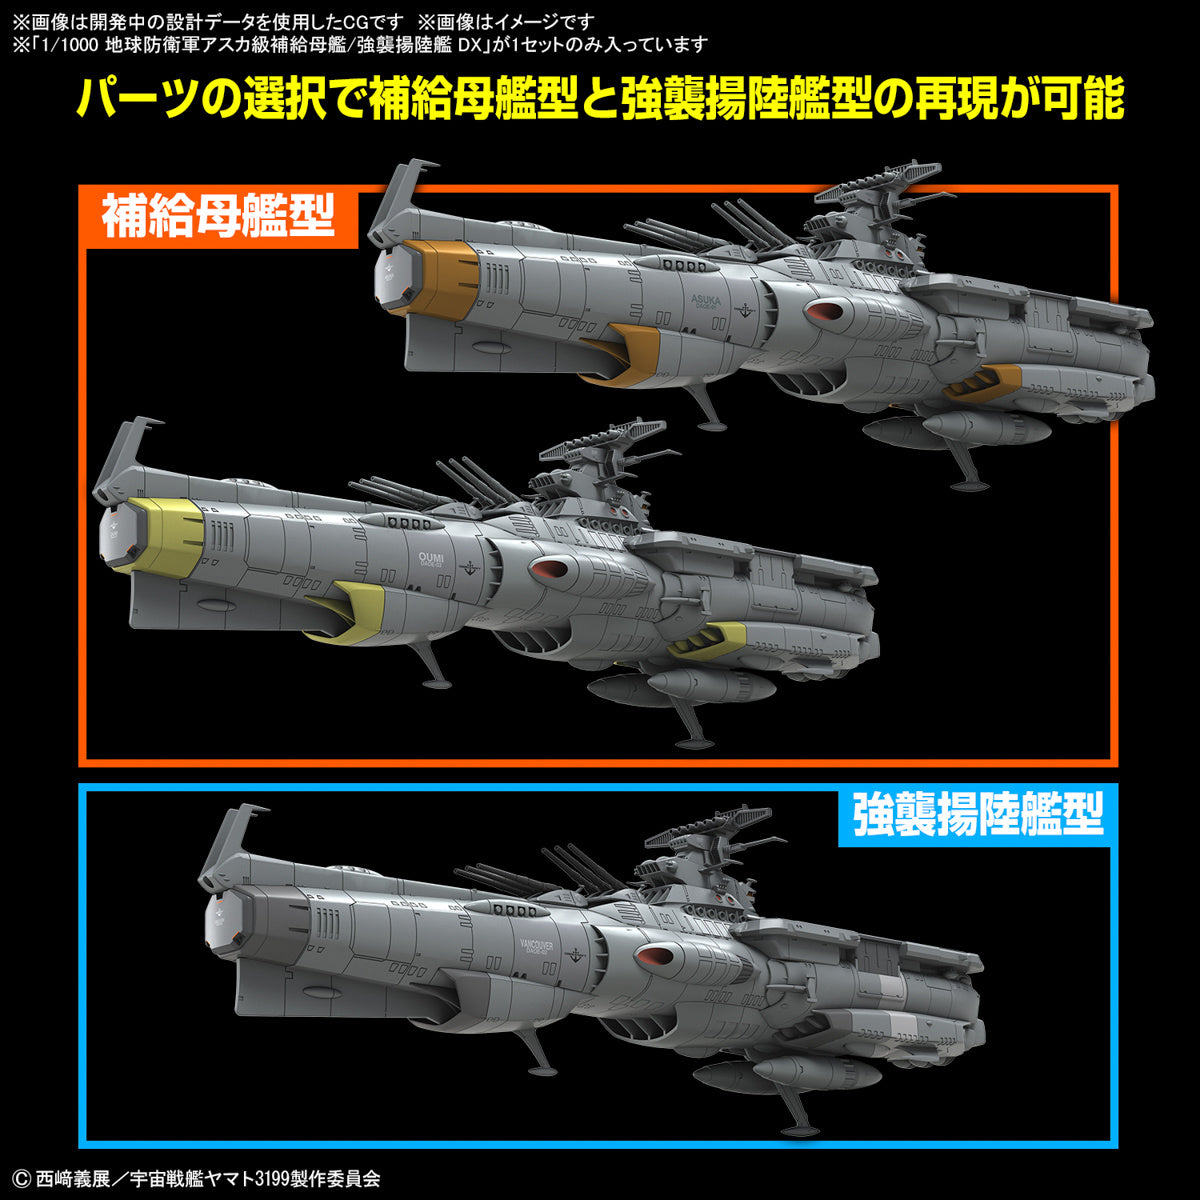 YAMATO - SPACE BATTLESHIP 1/1000 - EFCF ASUKA CLASS FAST COMBAT SUPPORT TENDER / AMPHIBIOUS ASSAULT SHIP DX **PRE-ORDER**